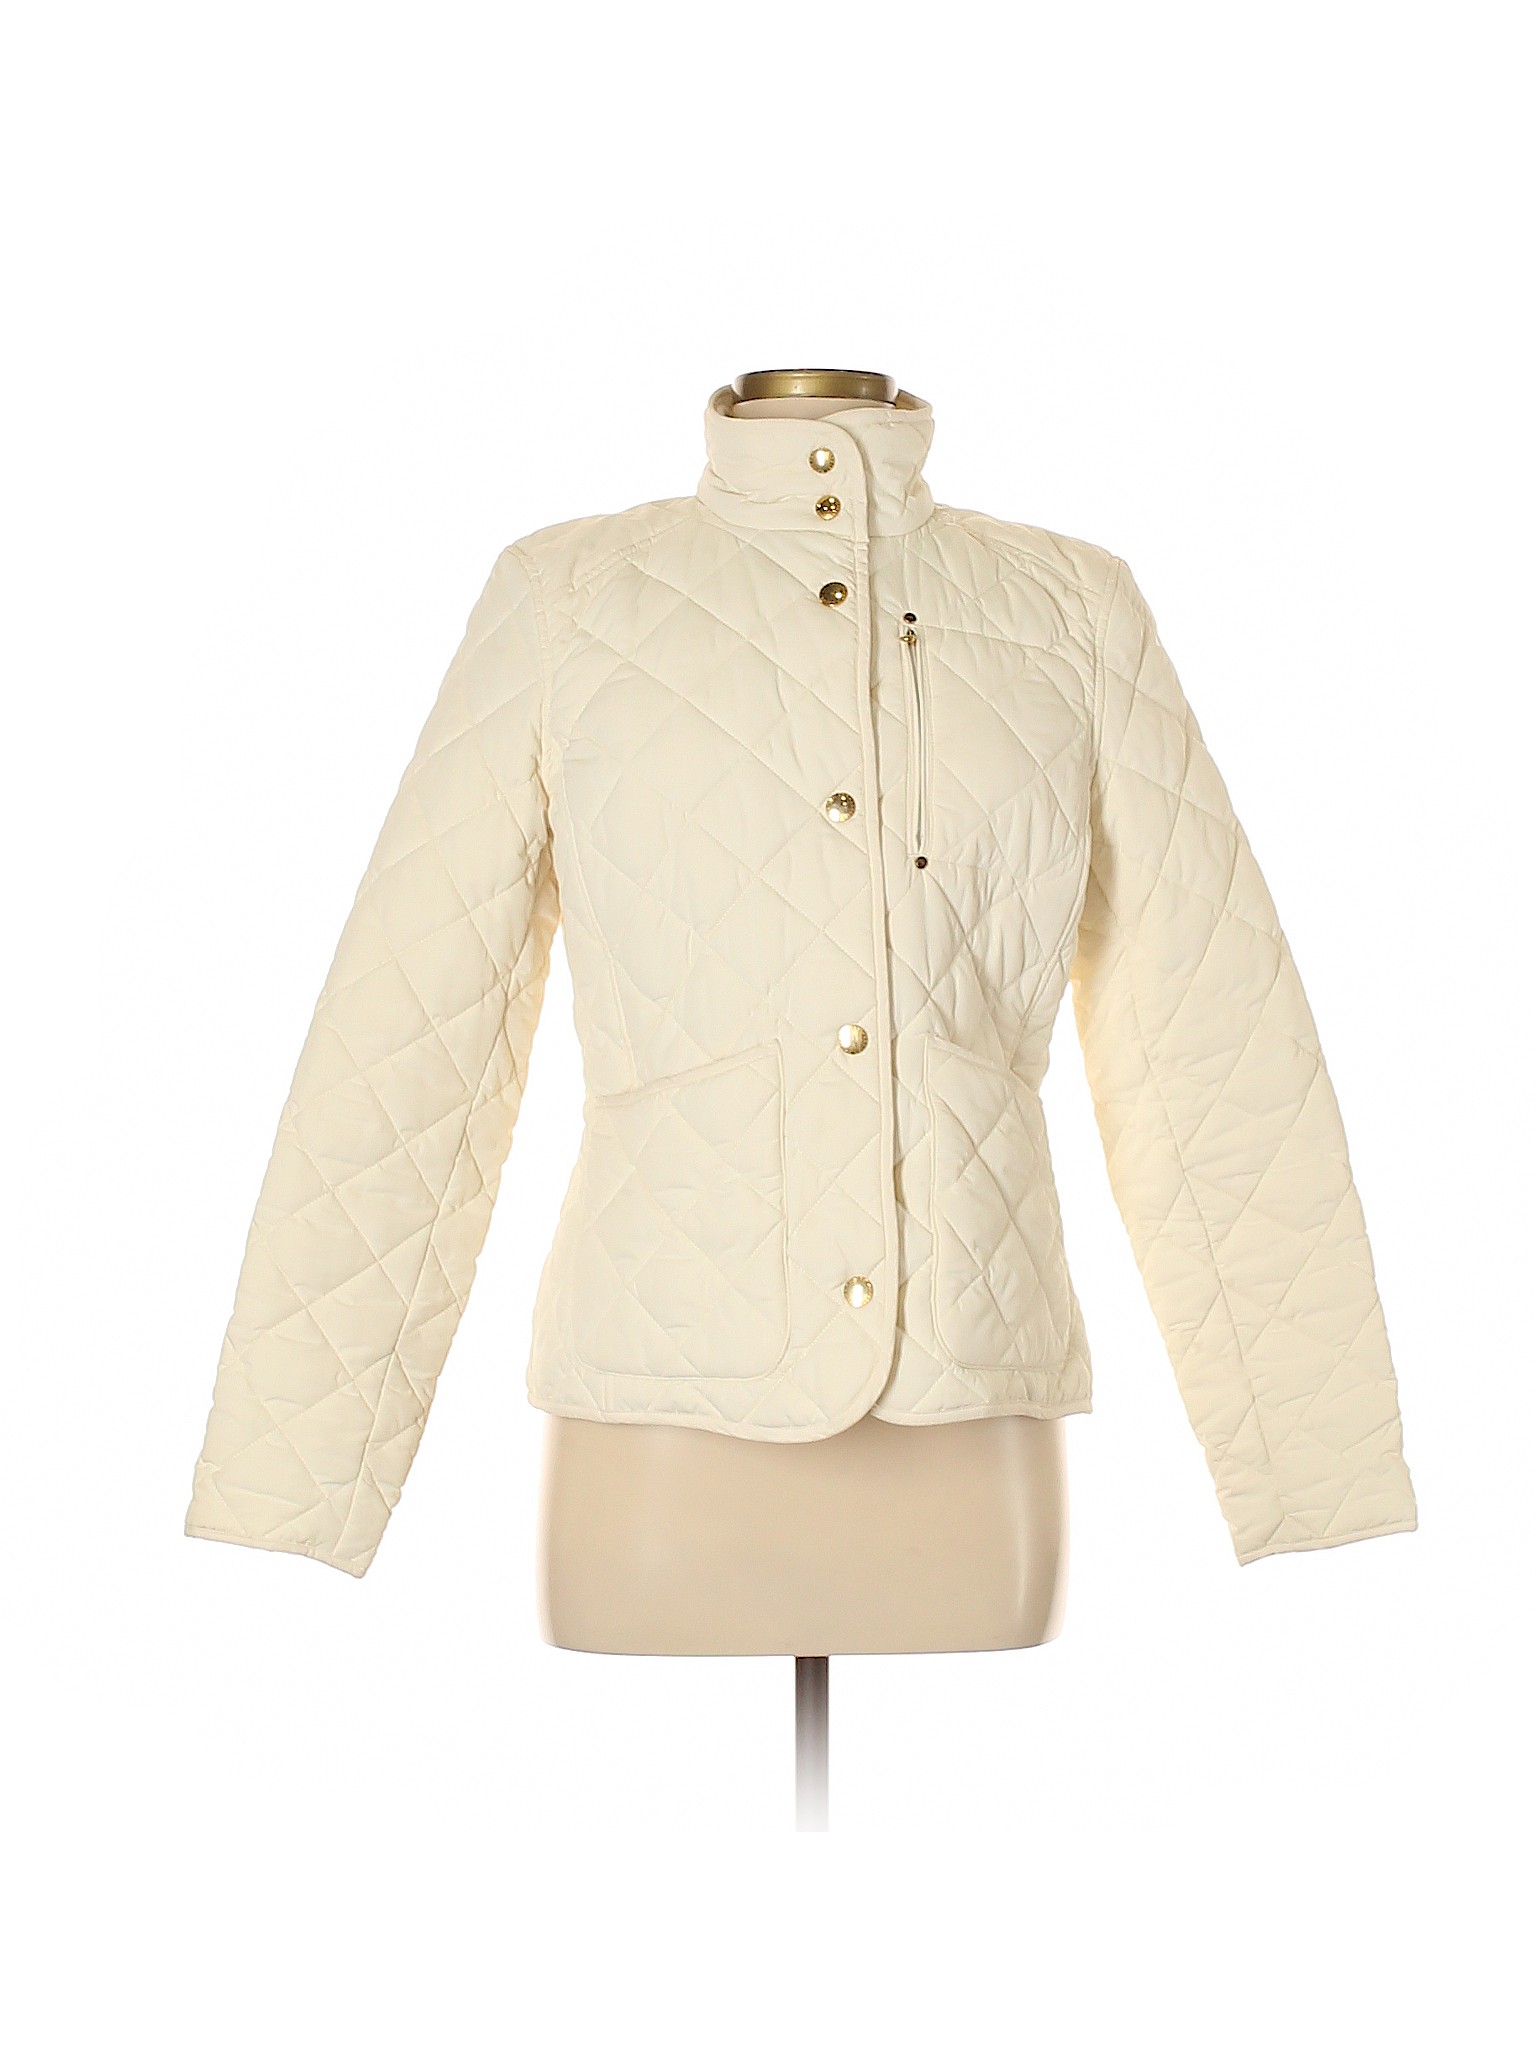 Lauren by Ralph Lauren 100% Polyester Solid Ivory Jacket Size M - 75% ...